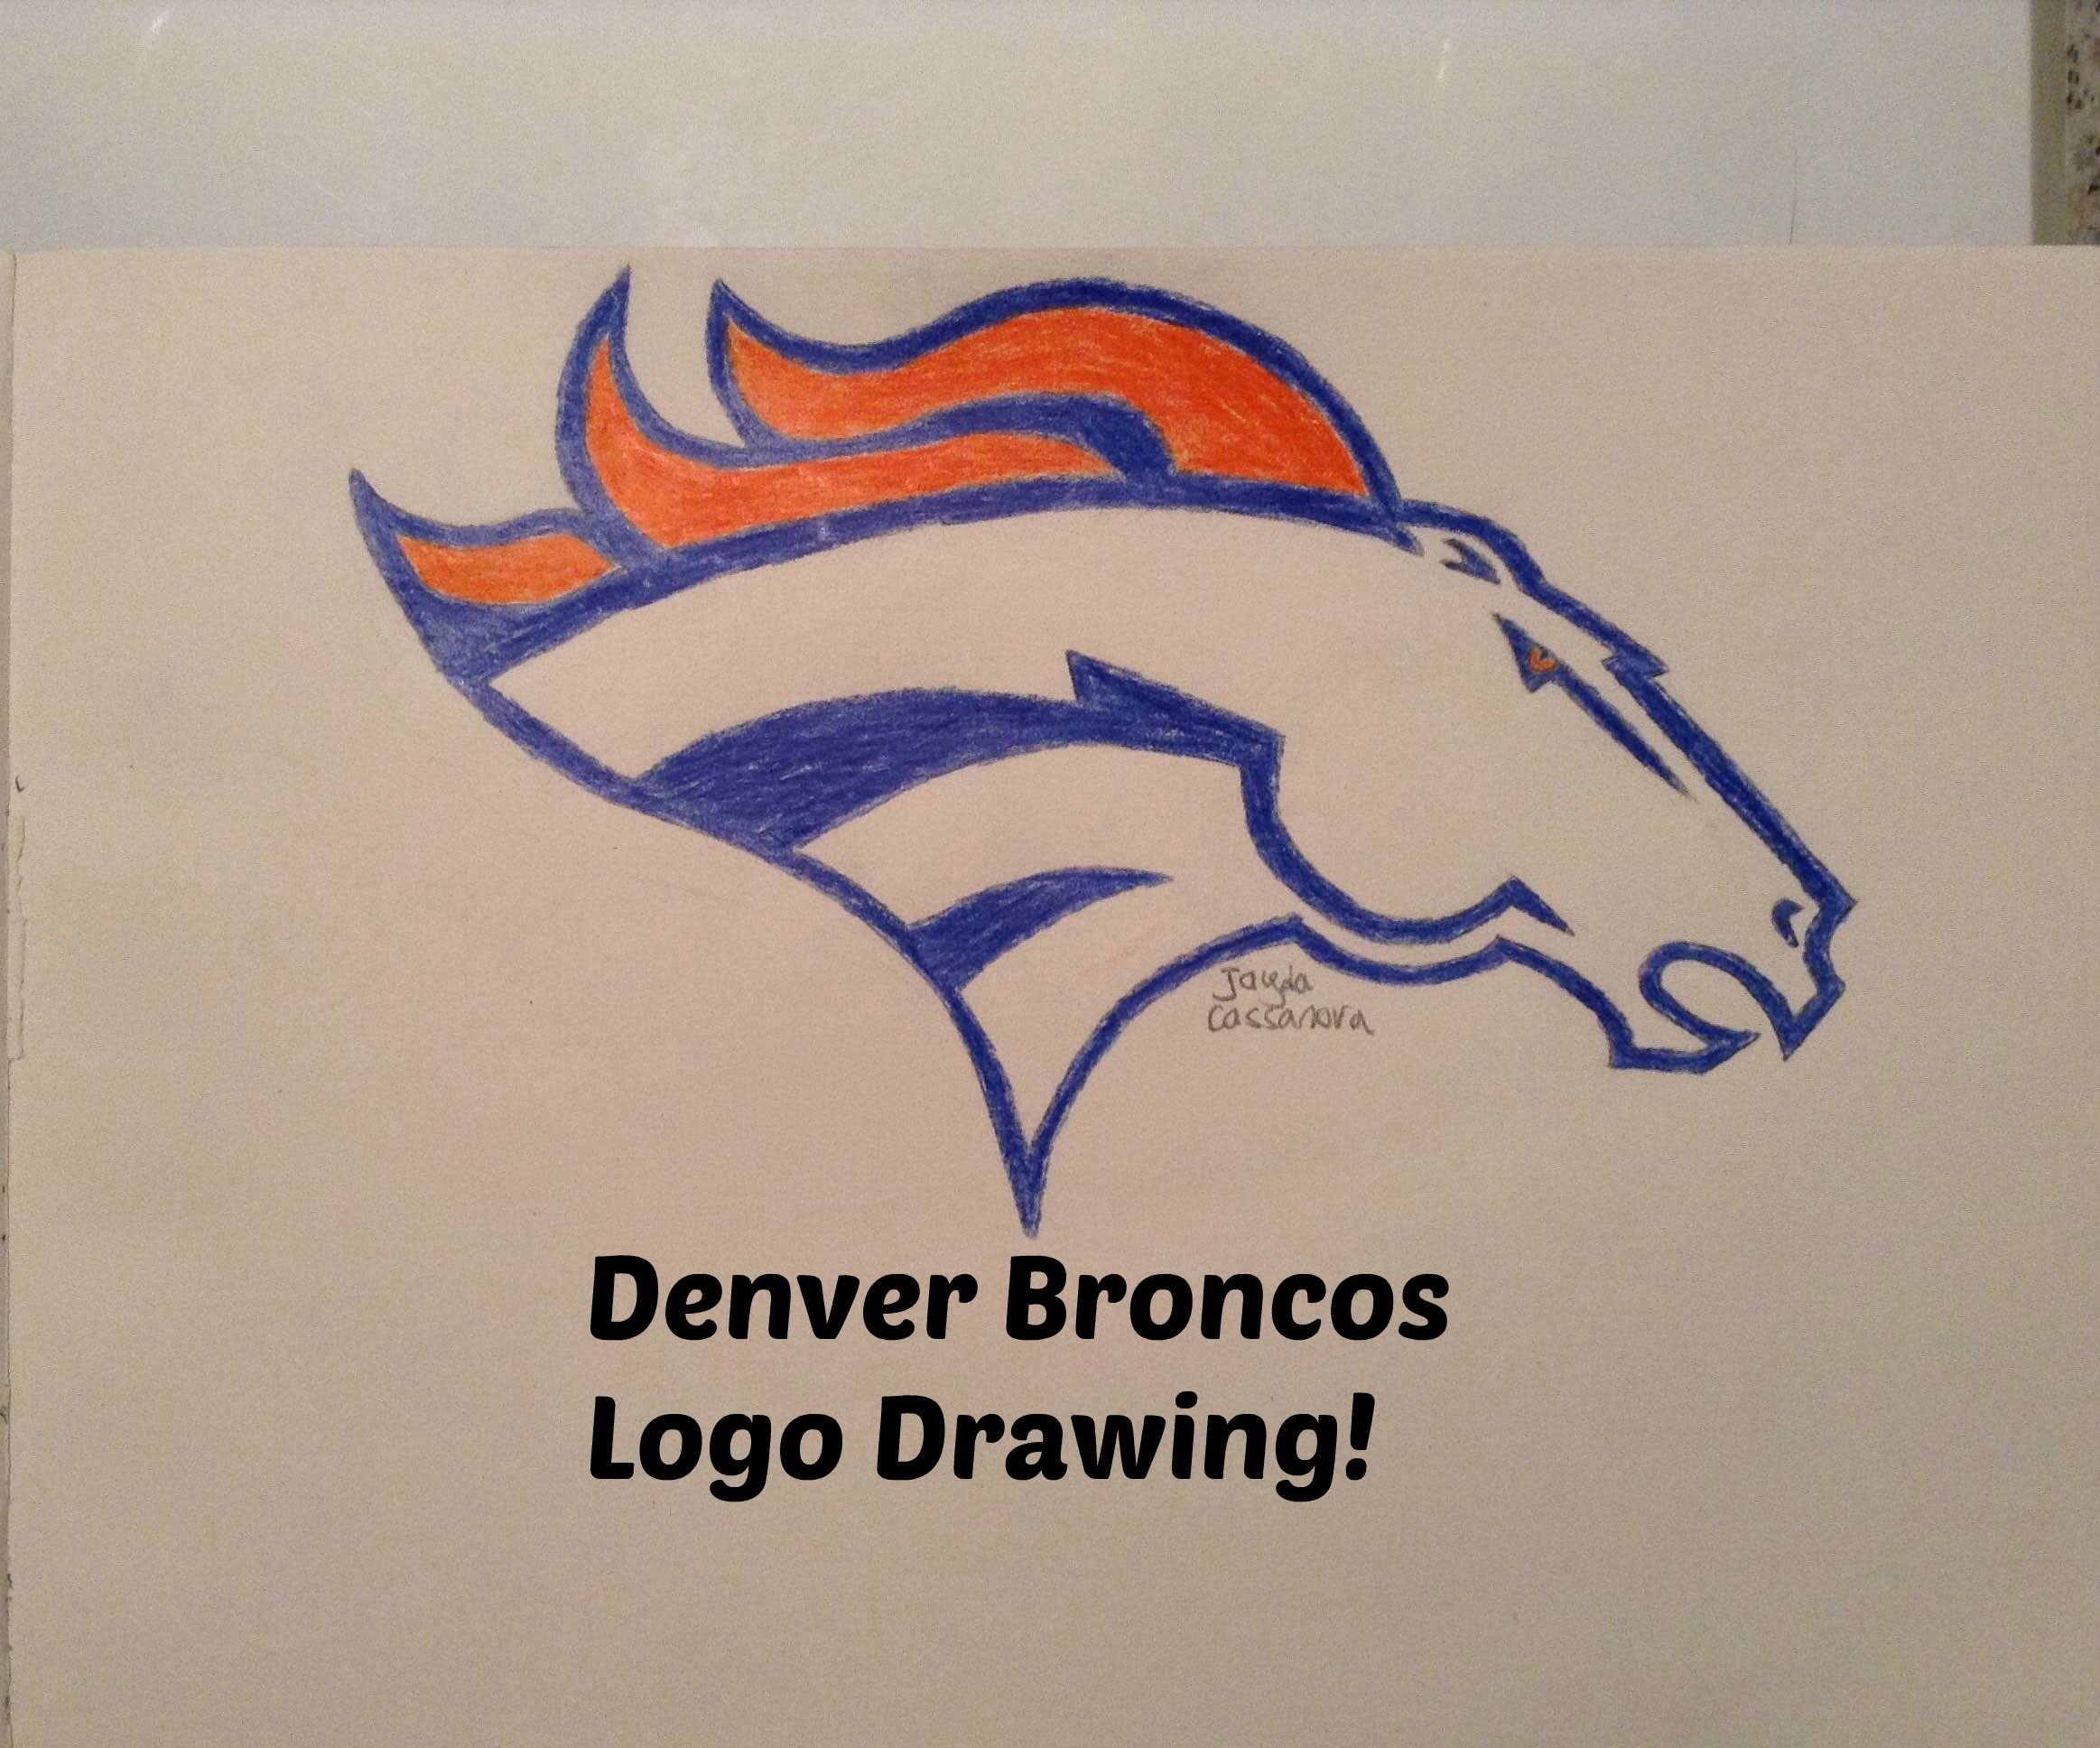 Denver Broncos Logo Drawing at Explore collection